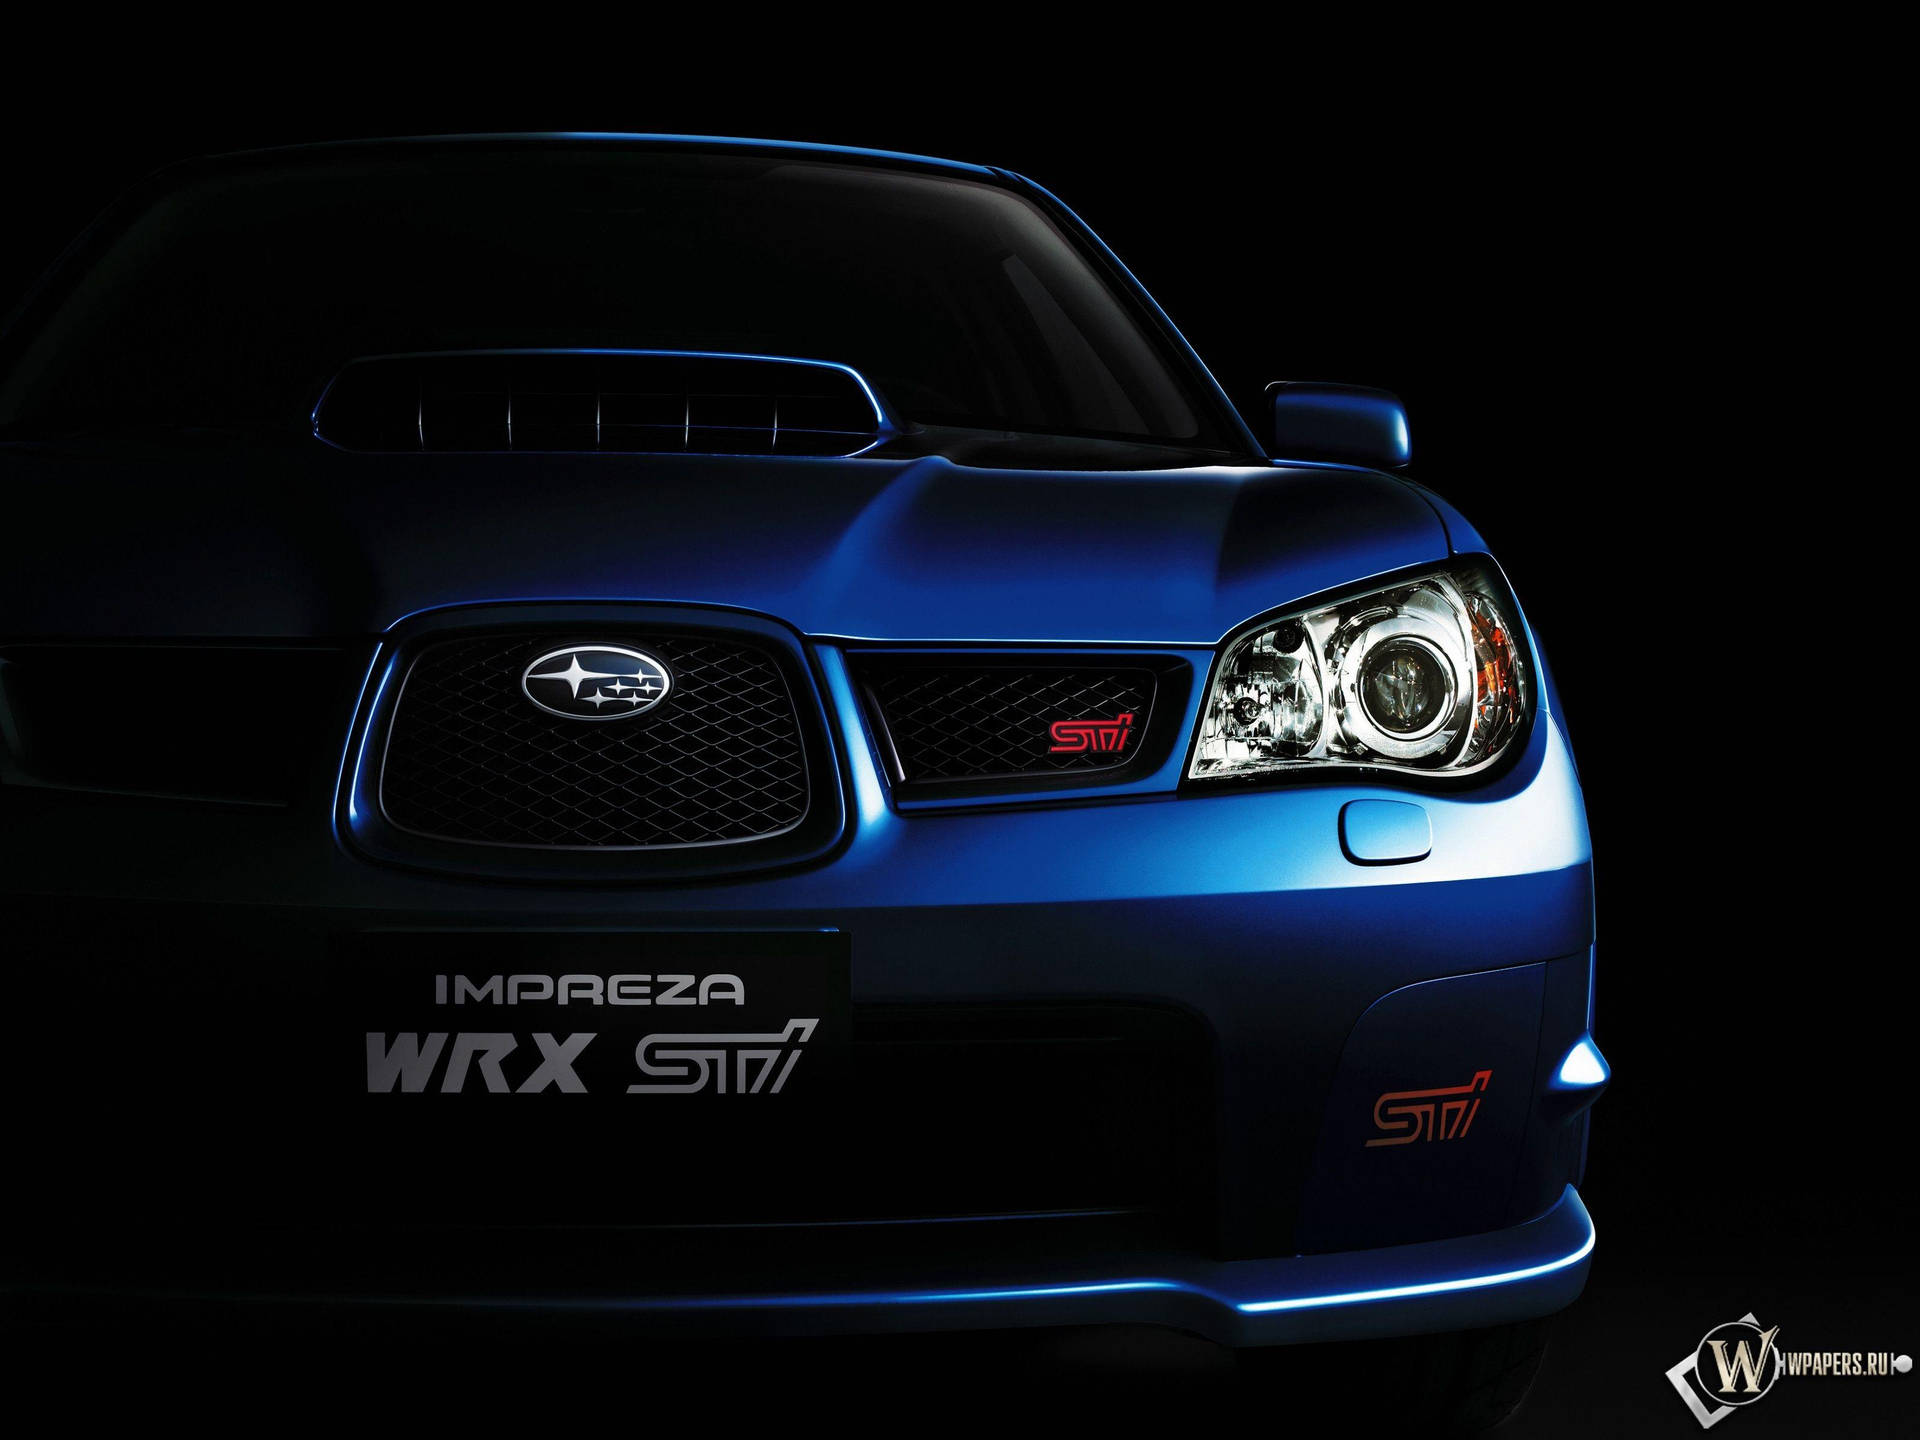 Subaru Impreza Wrx St7 Blue Background